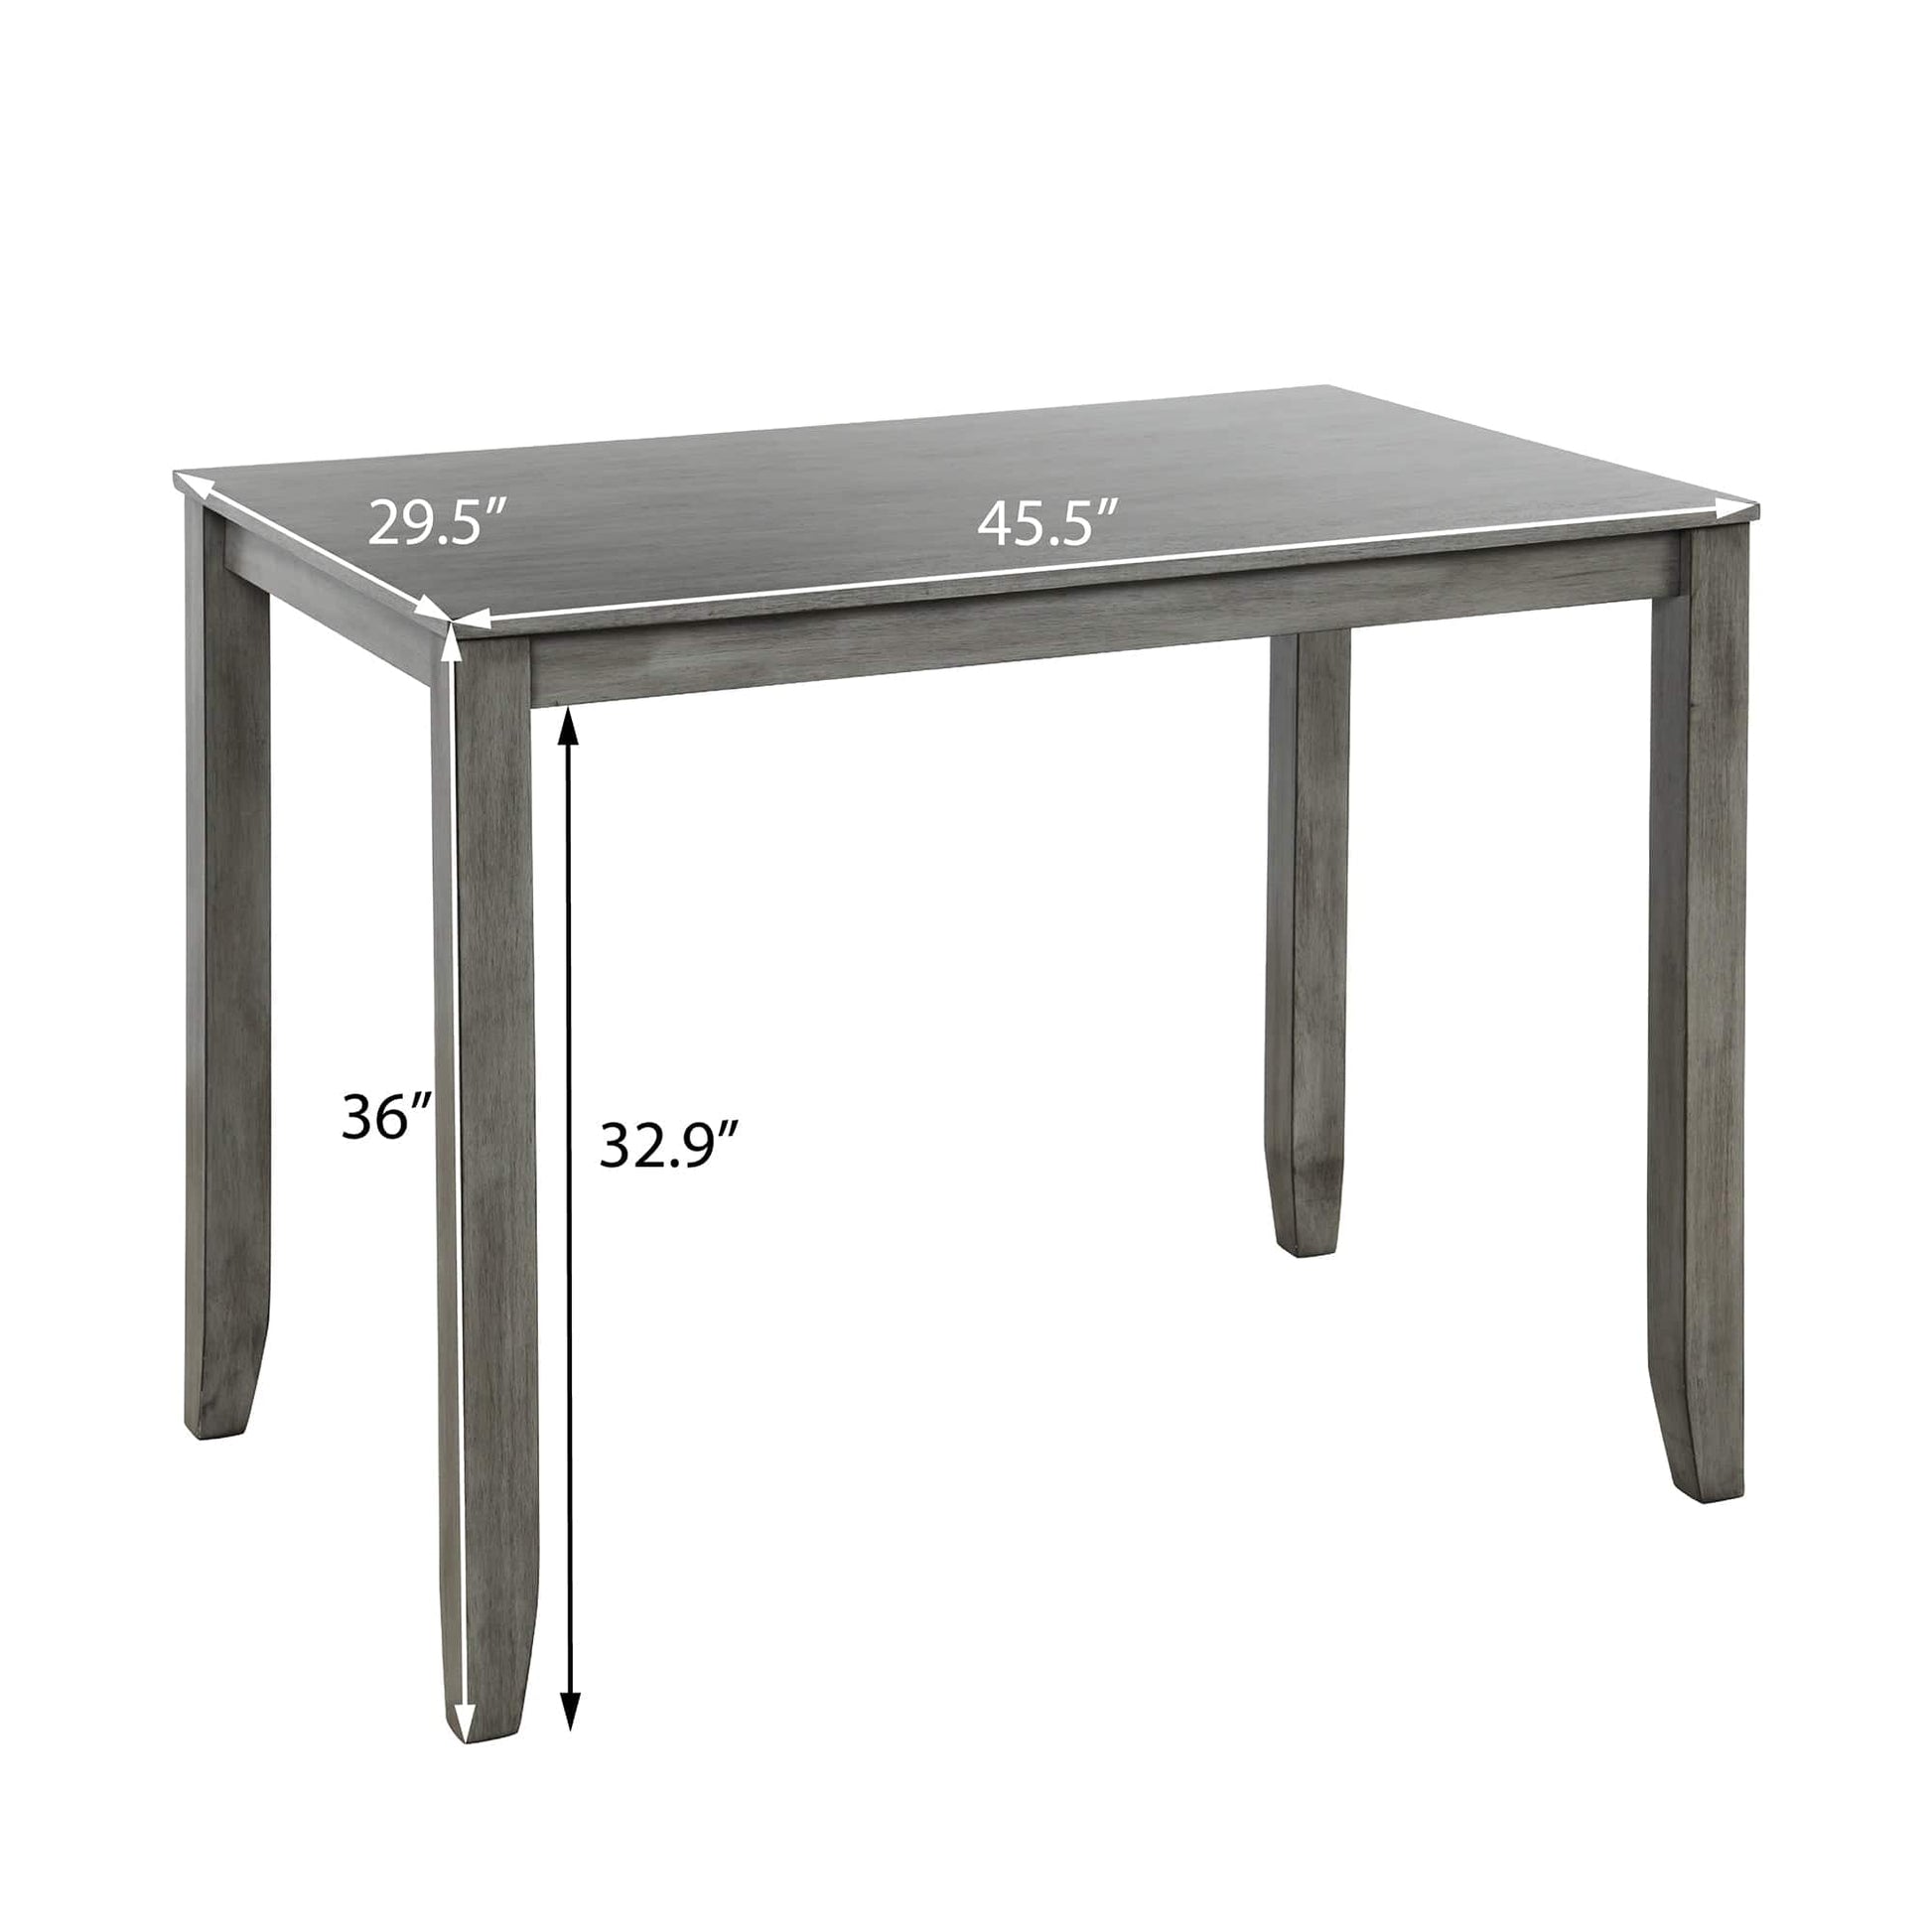 1st Choice Furniture Direct Counter Height Bar Table Set 1st Choice 5-Piece Vintage Rectangular Counter Height Bar Table Set